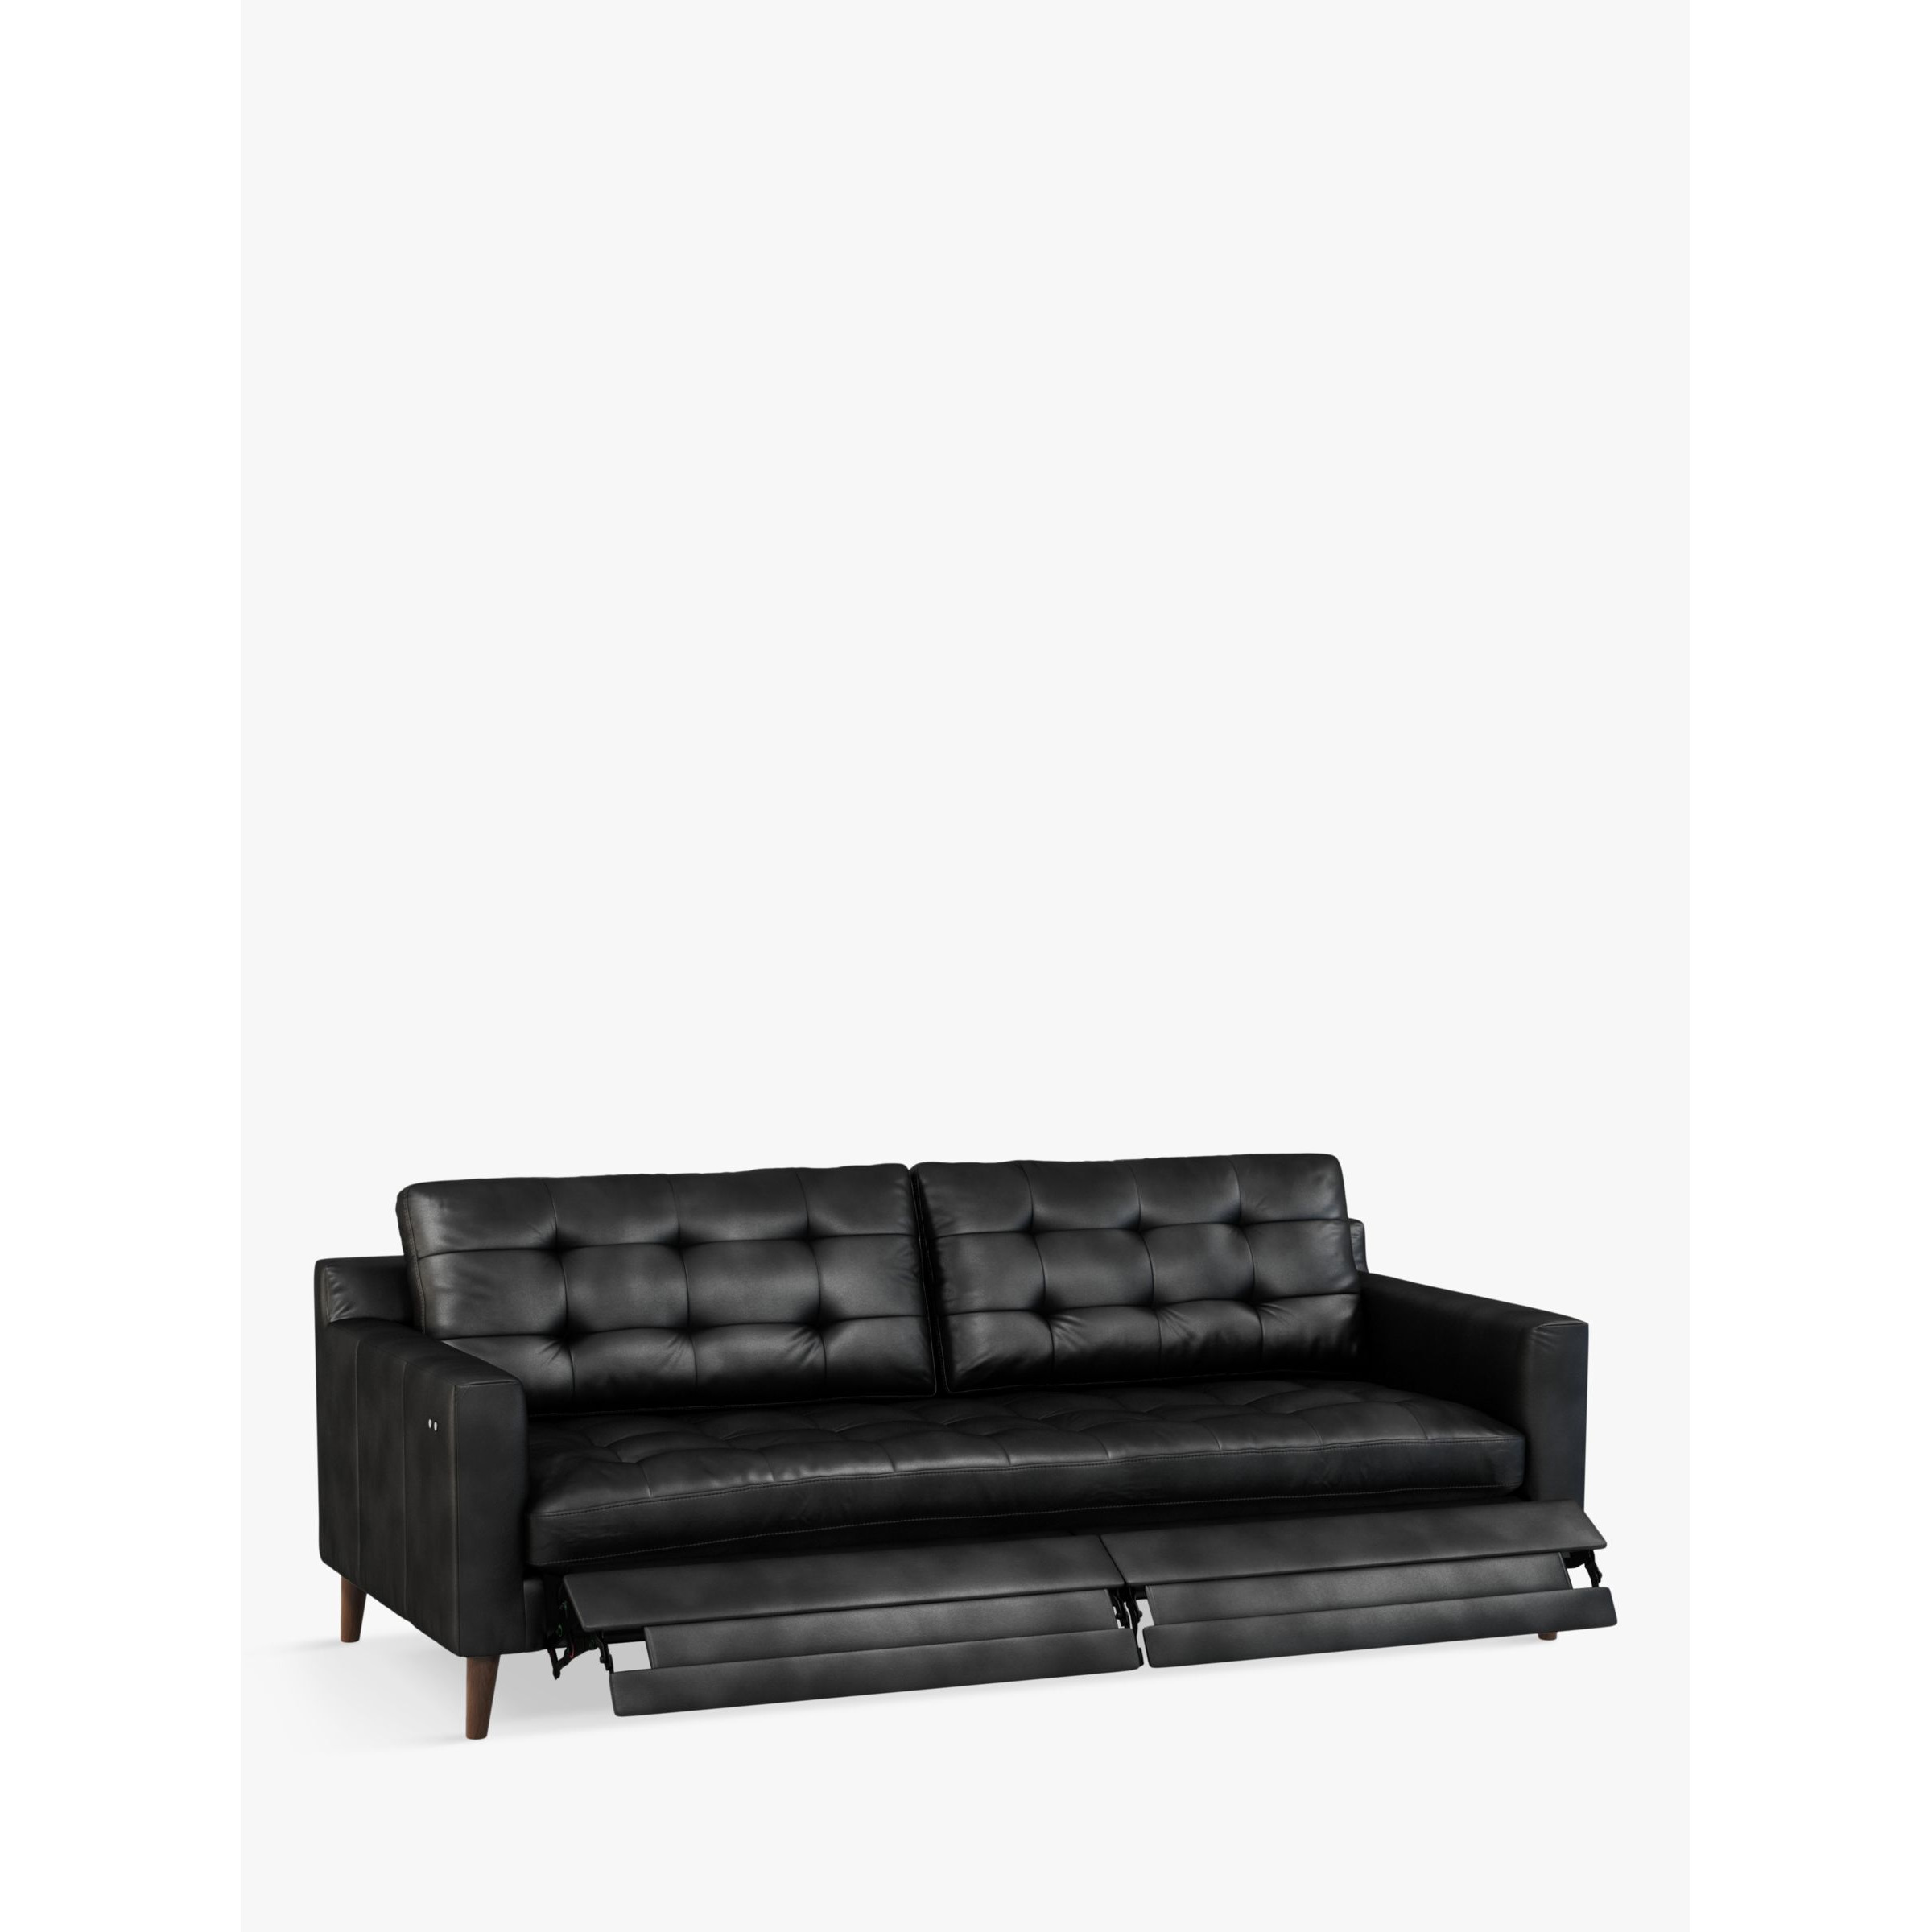 John Lewis Draper Motion Large 3 Seater Leather Sofa with Footrest Mechanism, Dark Leg - image 1